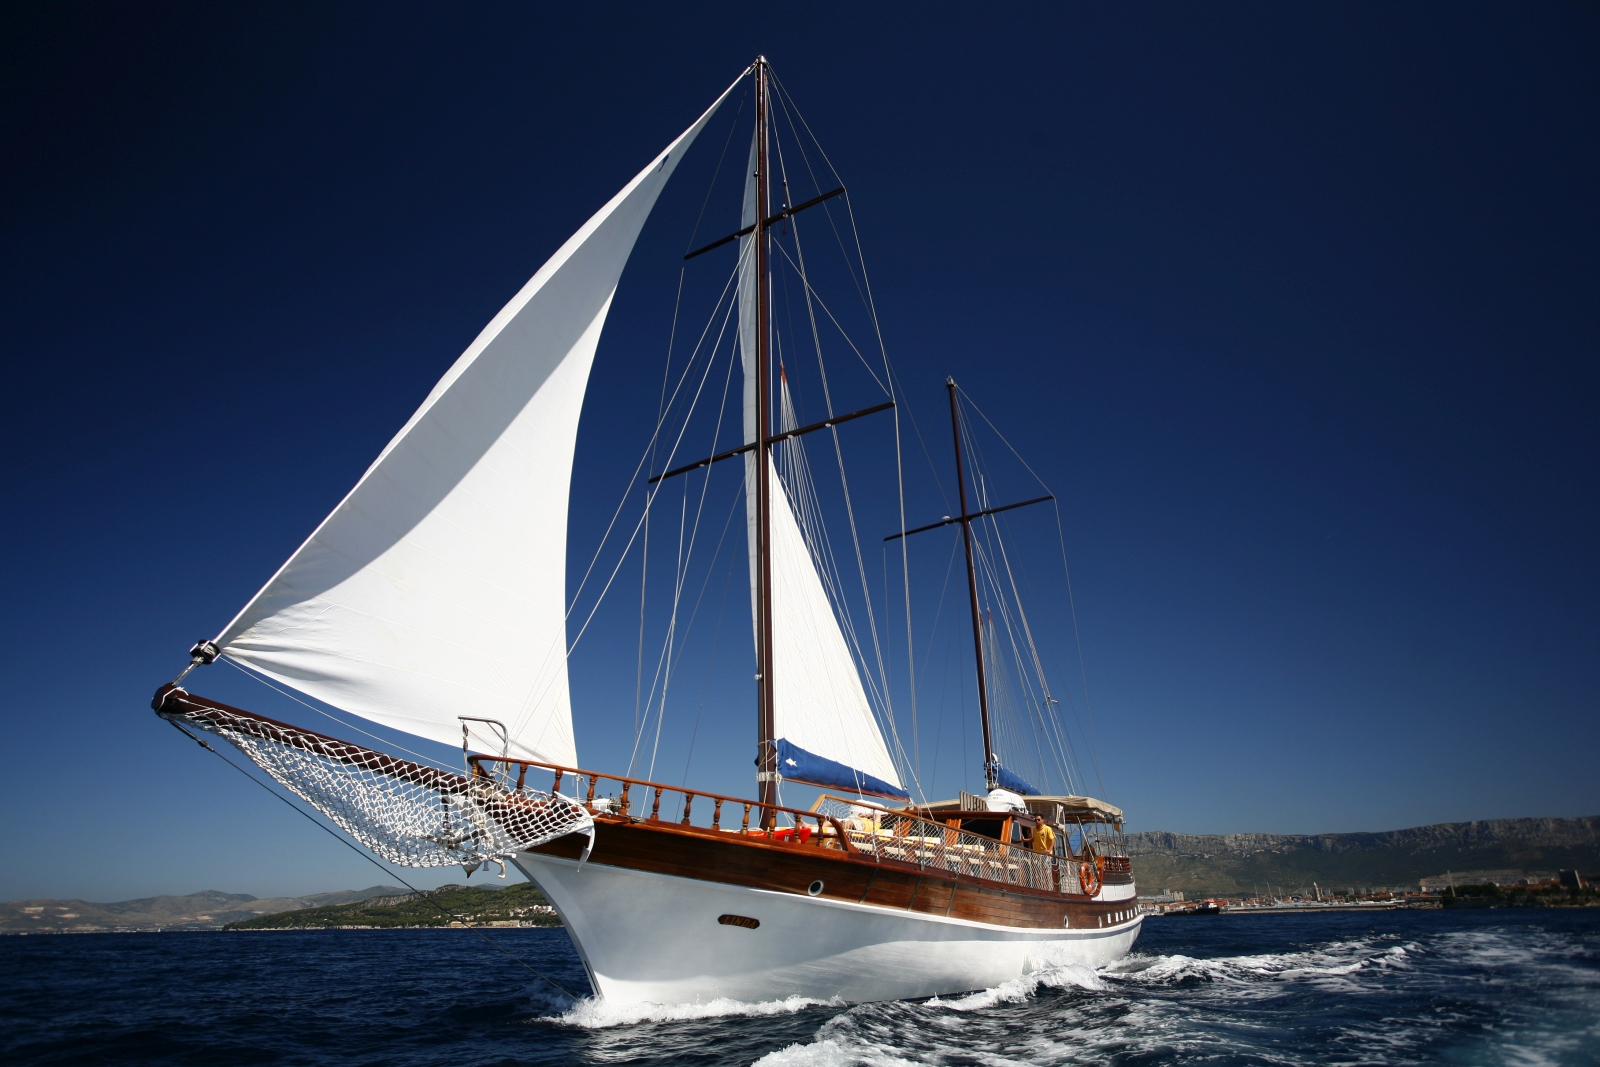 The gulet Linda sailing along the Croatian coastline